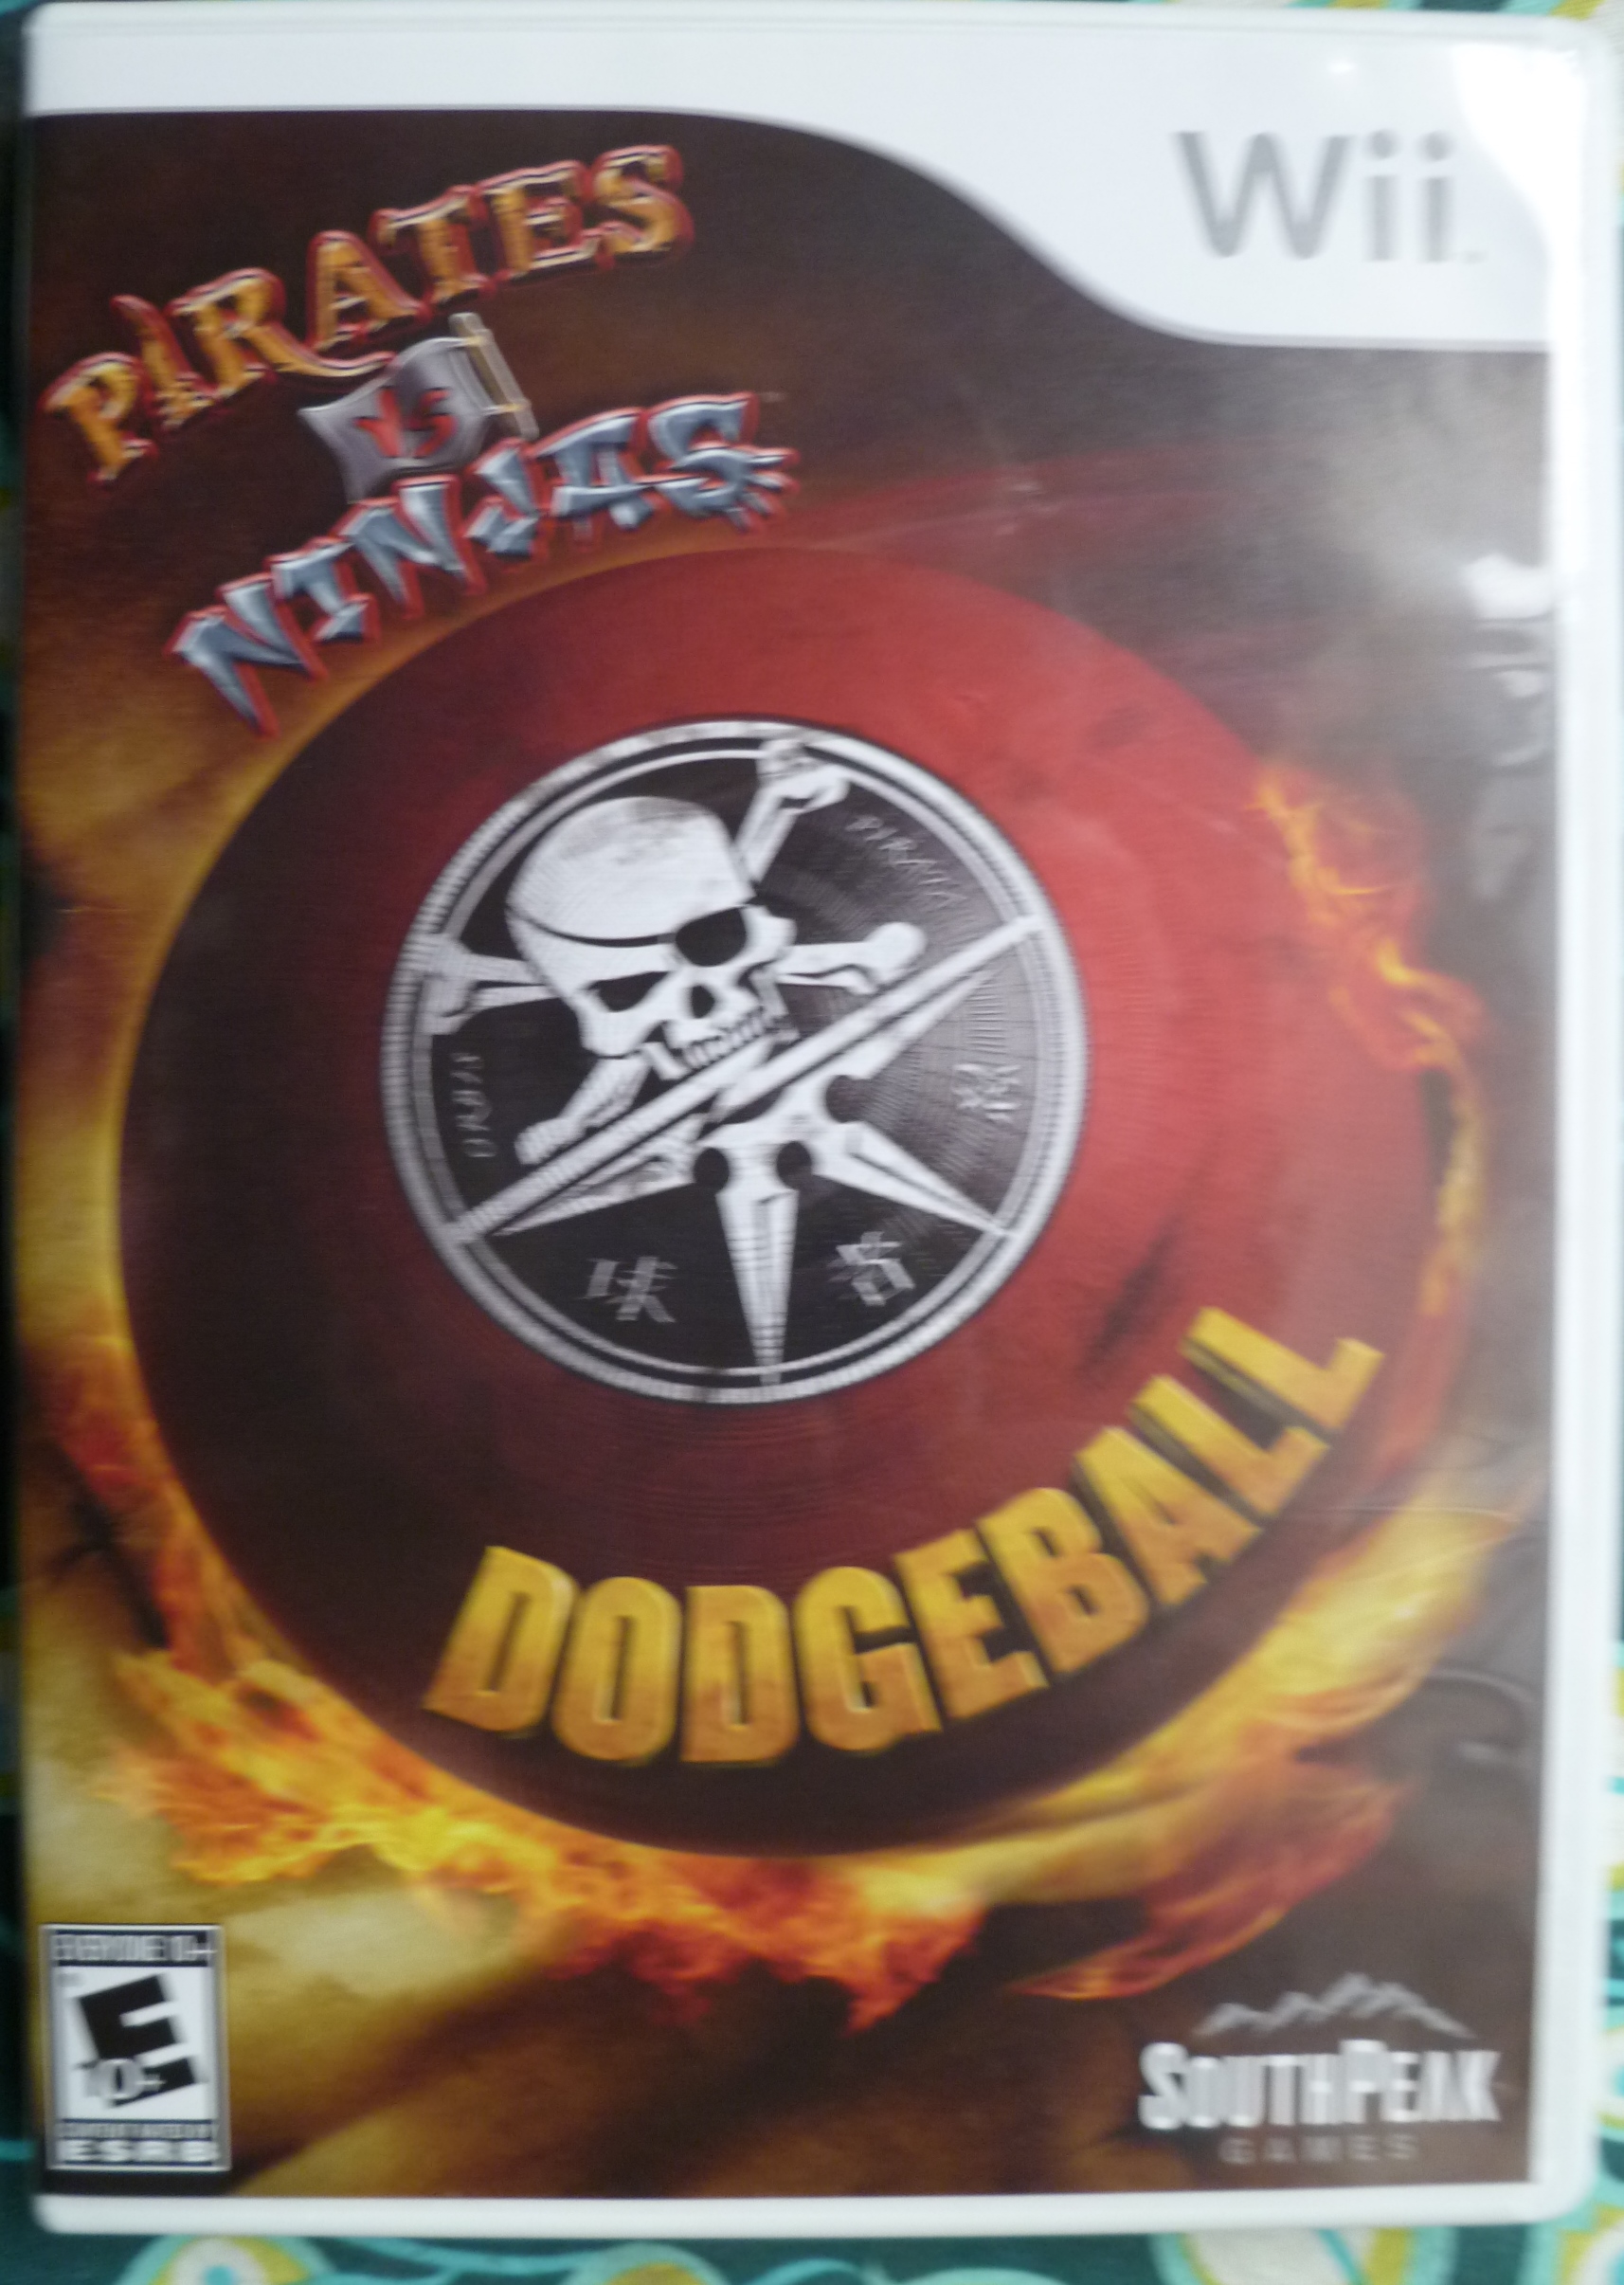 Pirates vs Ninjas Dodgeball Cover